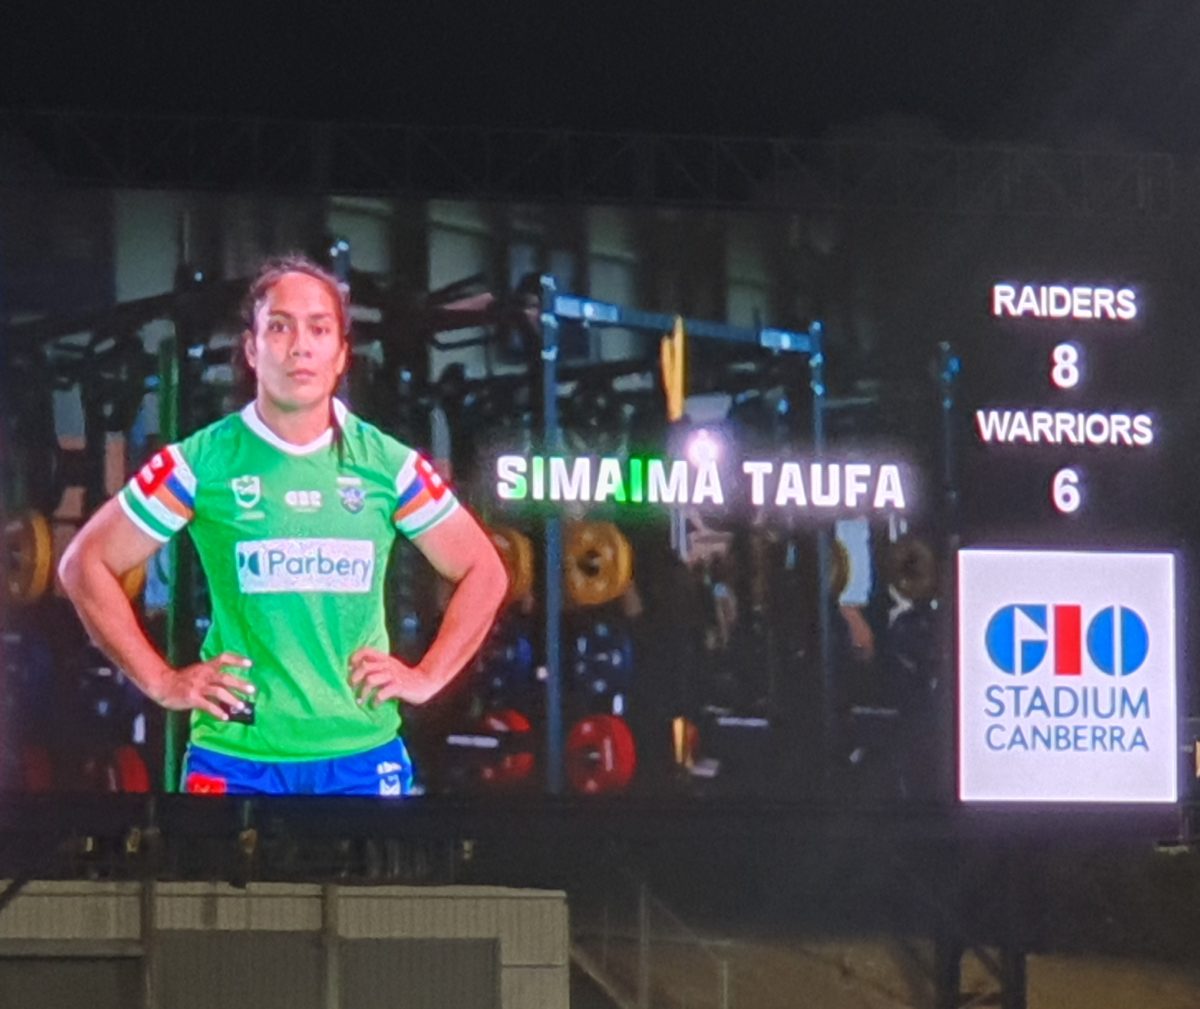 Simaima Taufa on the large screen at Canberra Stadium. Photo: Ric Condon.